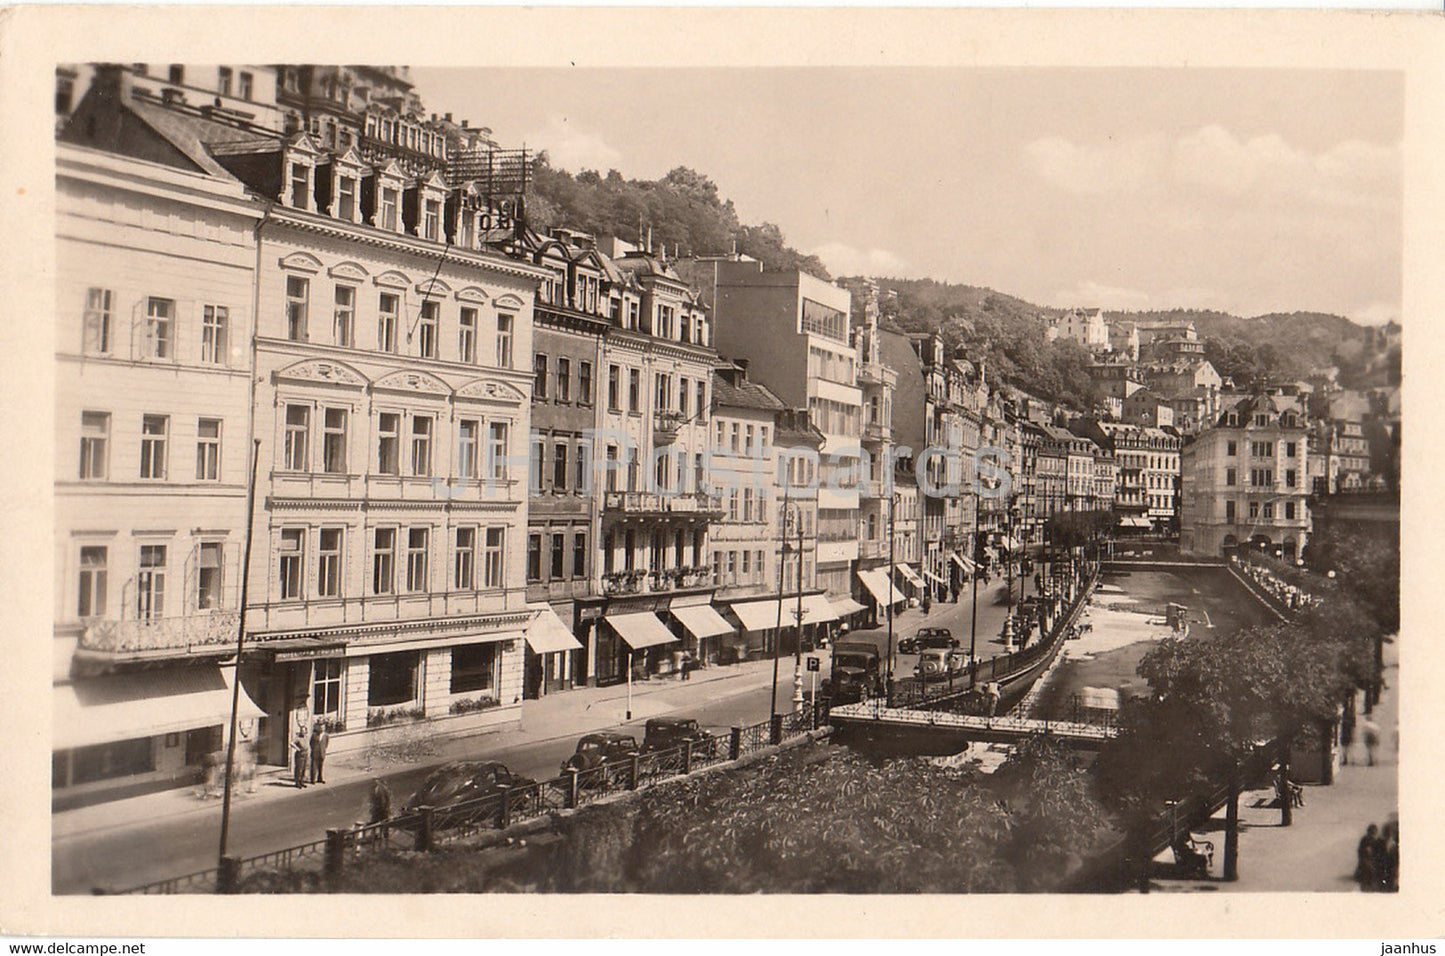 Karlovy Vary - Karlsbad - Vridelni ulice - old postcard - 1953 - Czechoslovakia - Czech Republic - used - JH Postcards